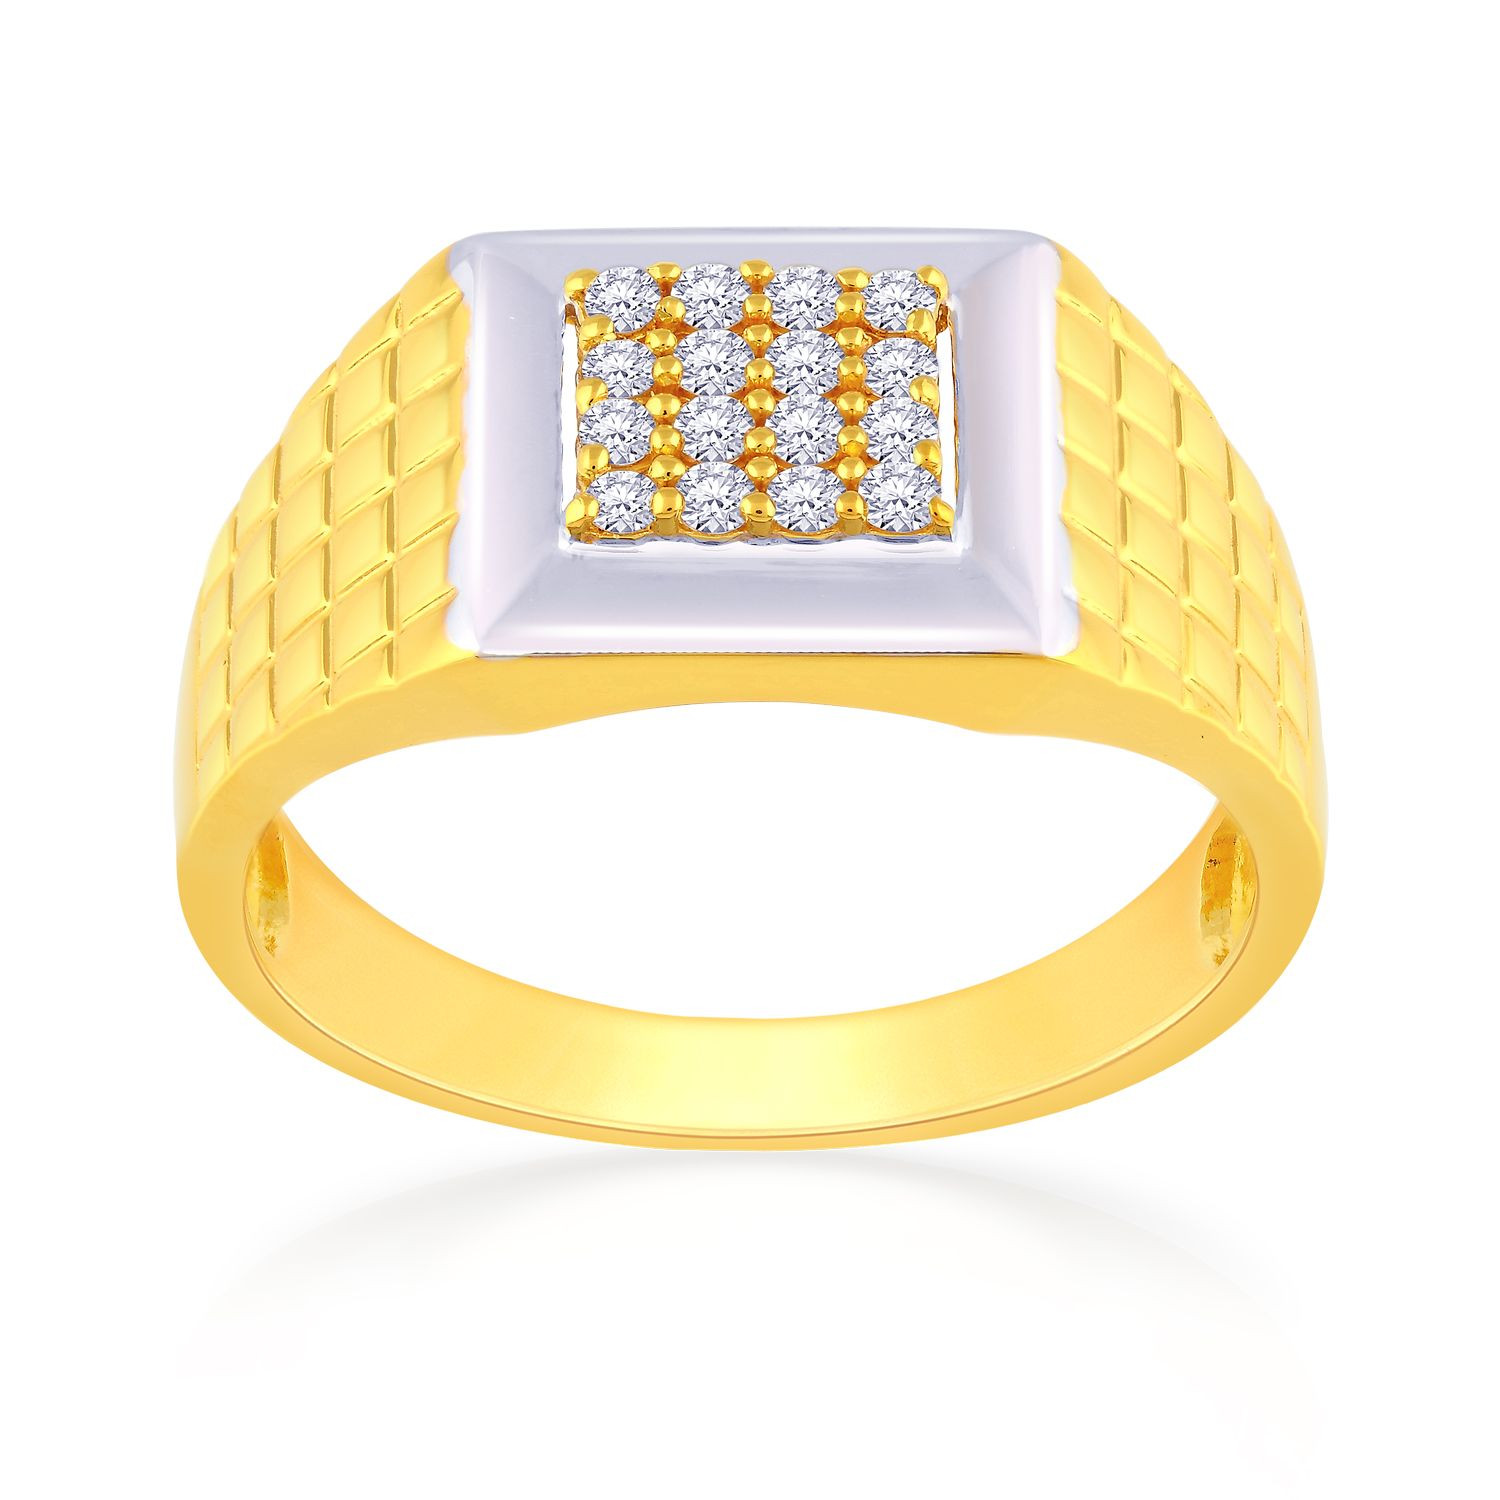 Buy Malabar Gold Ring NZR412 for Men Online | Malabar Gold & Diamonds